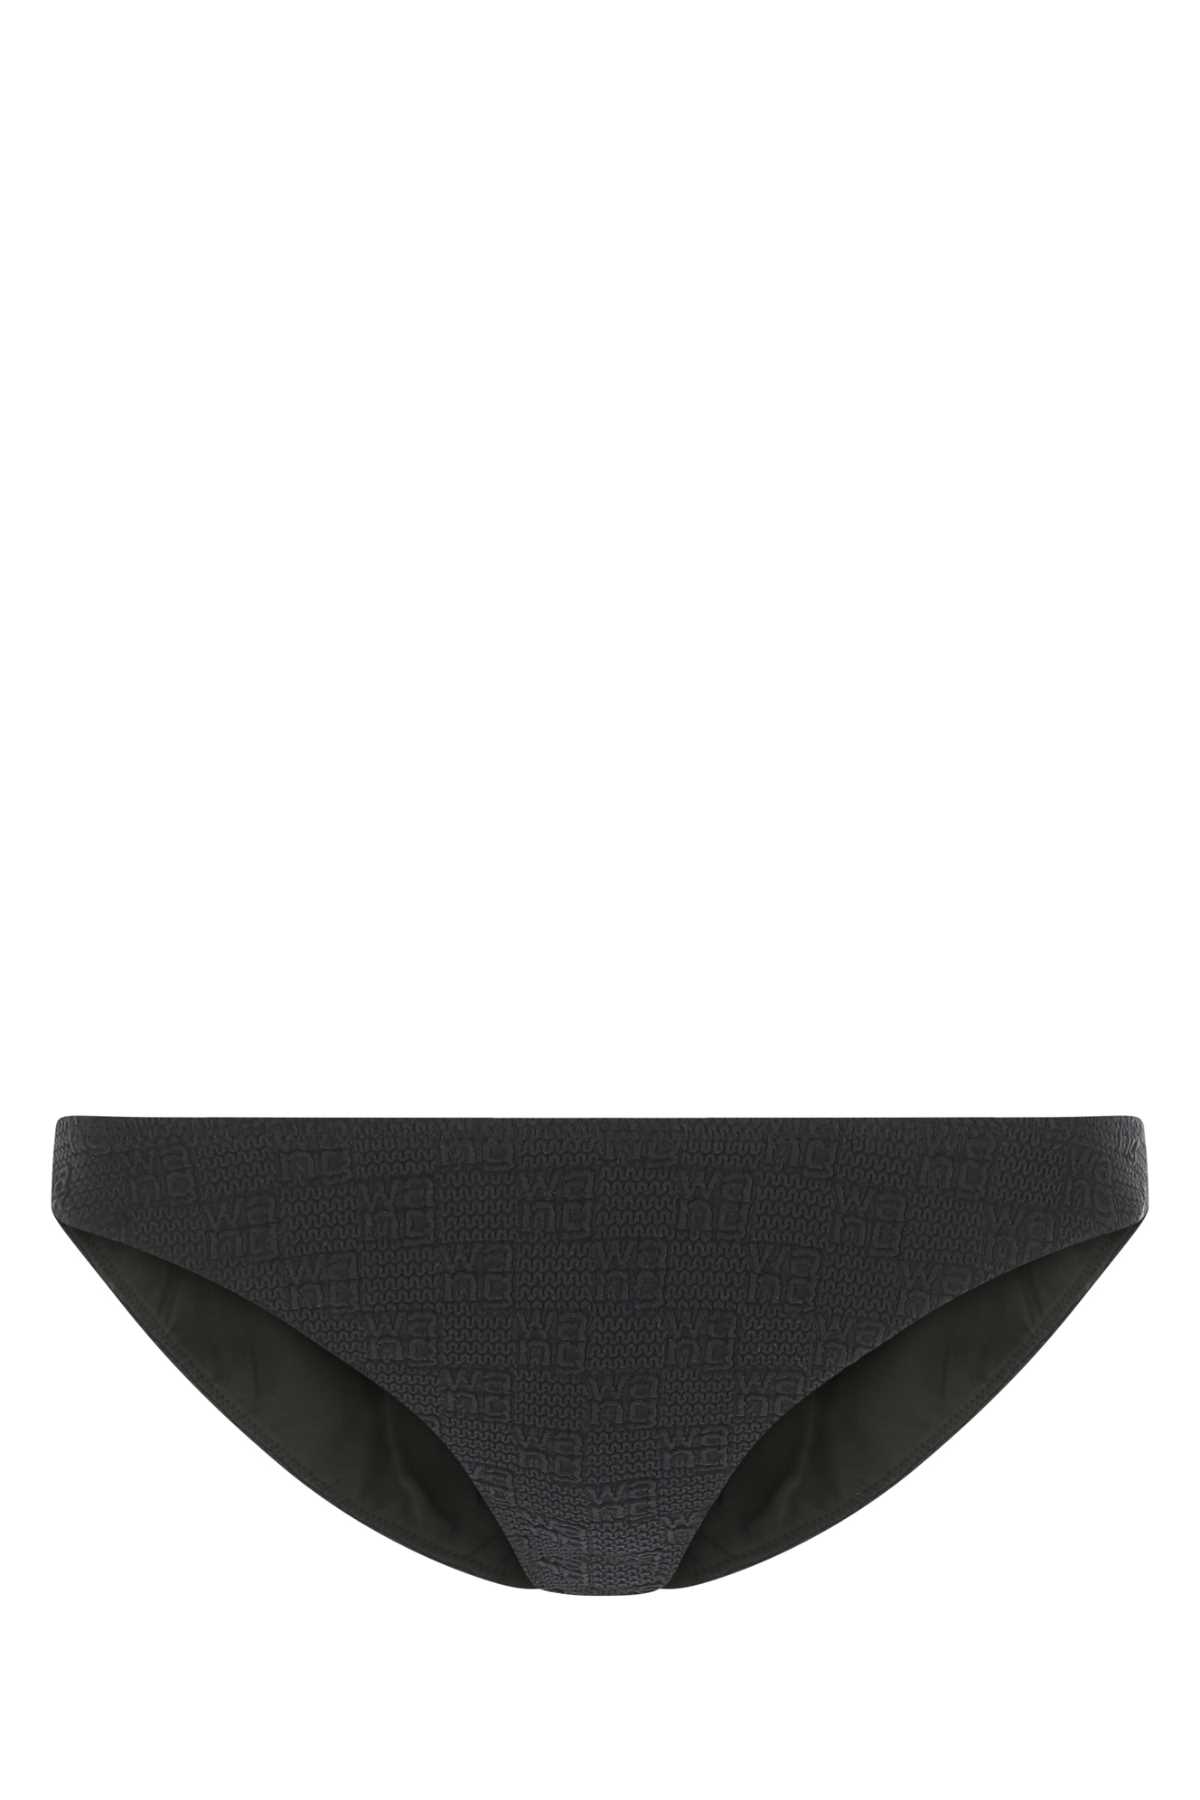 Black Stretch Nylon Bikini Bottom